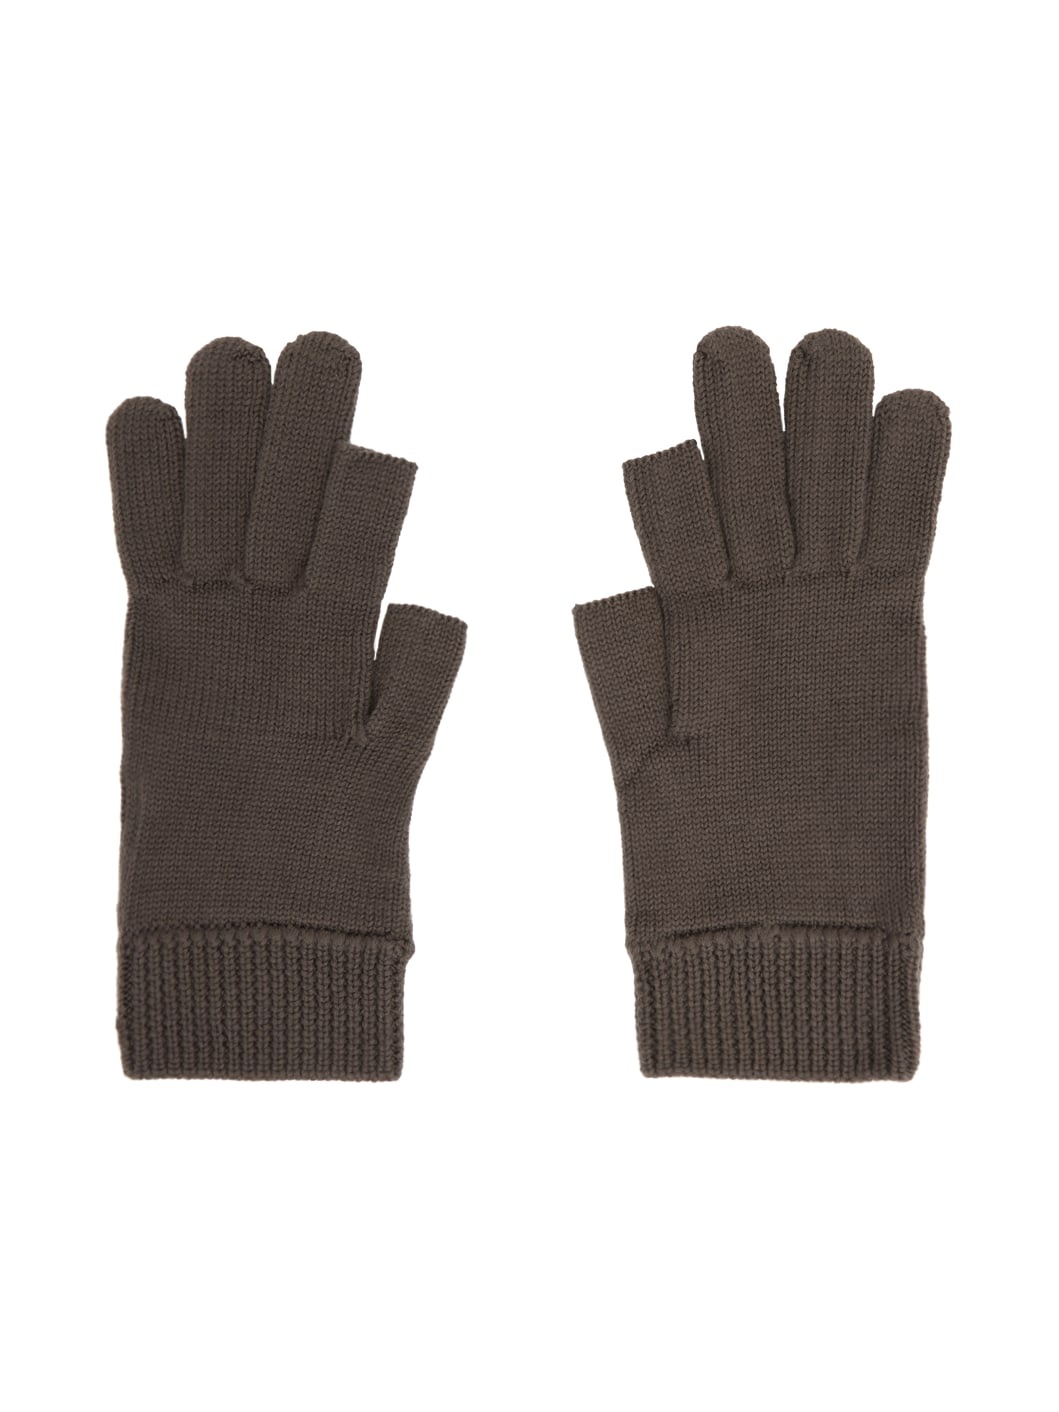 Gray Touchscreen Gloves - 1